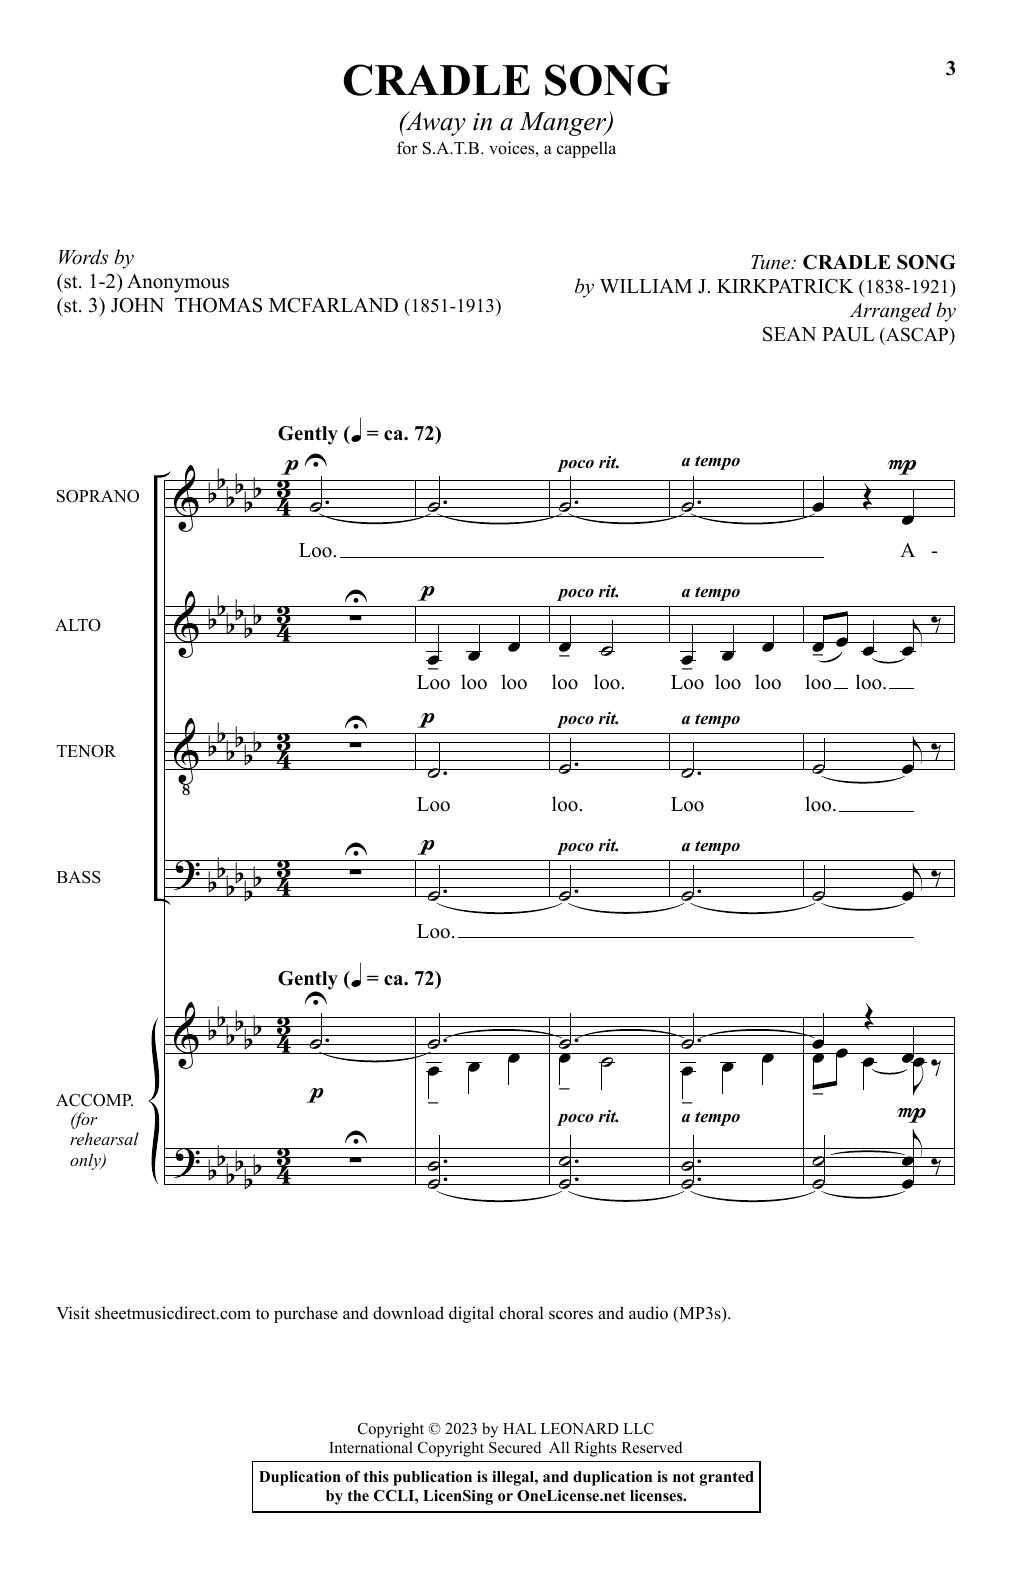 William J. Kirkpatrick Cradle Song (Away In A Manger) (arr. Sean Paul) Sheet Music Notes & Chords for SATB Choir - Download or Print PDF